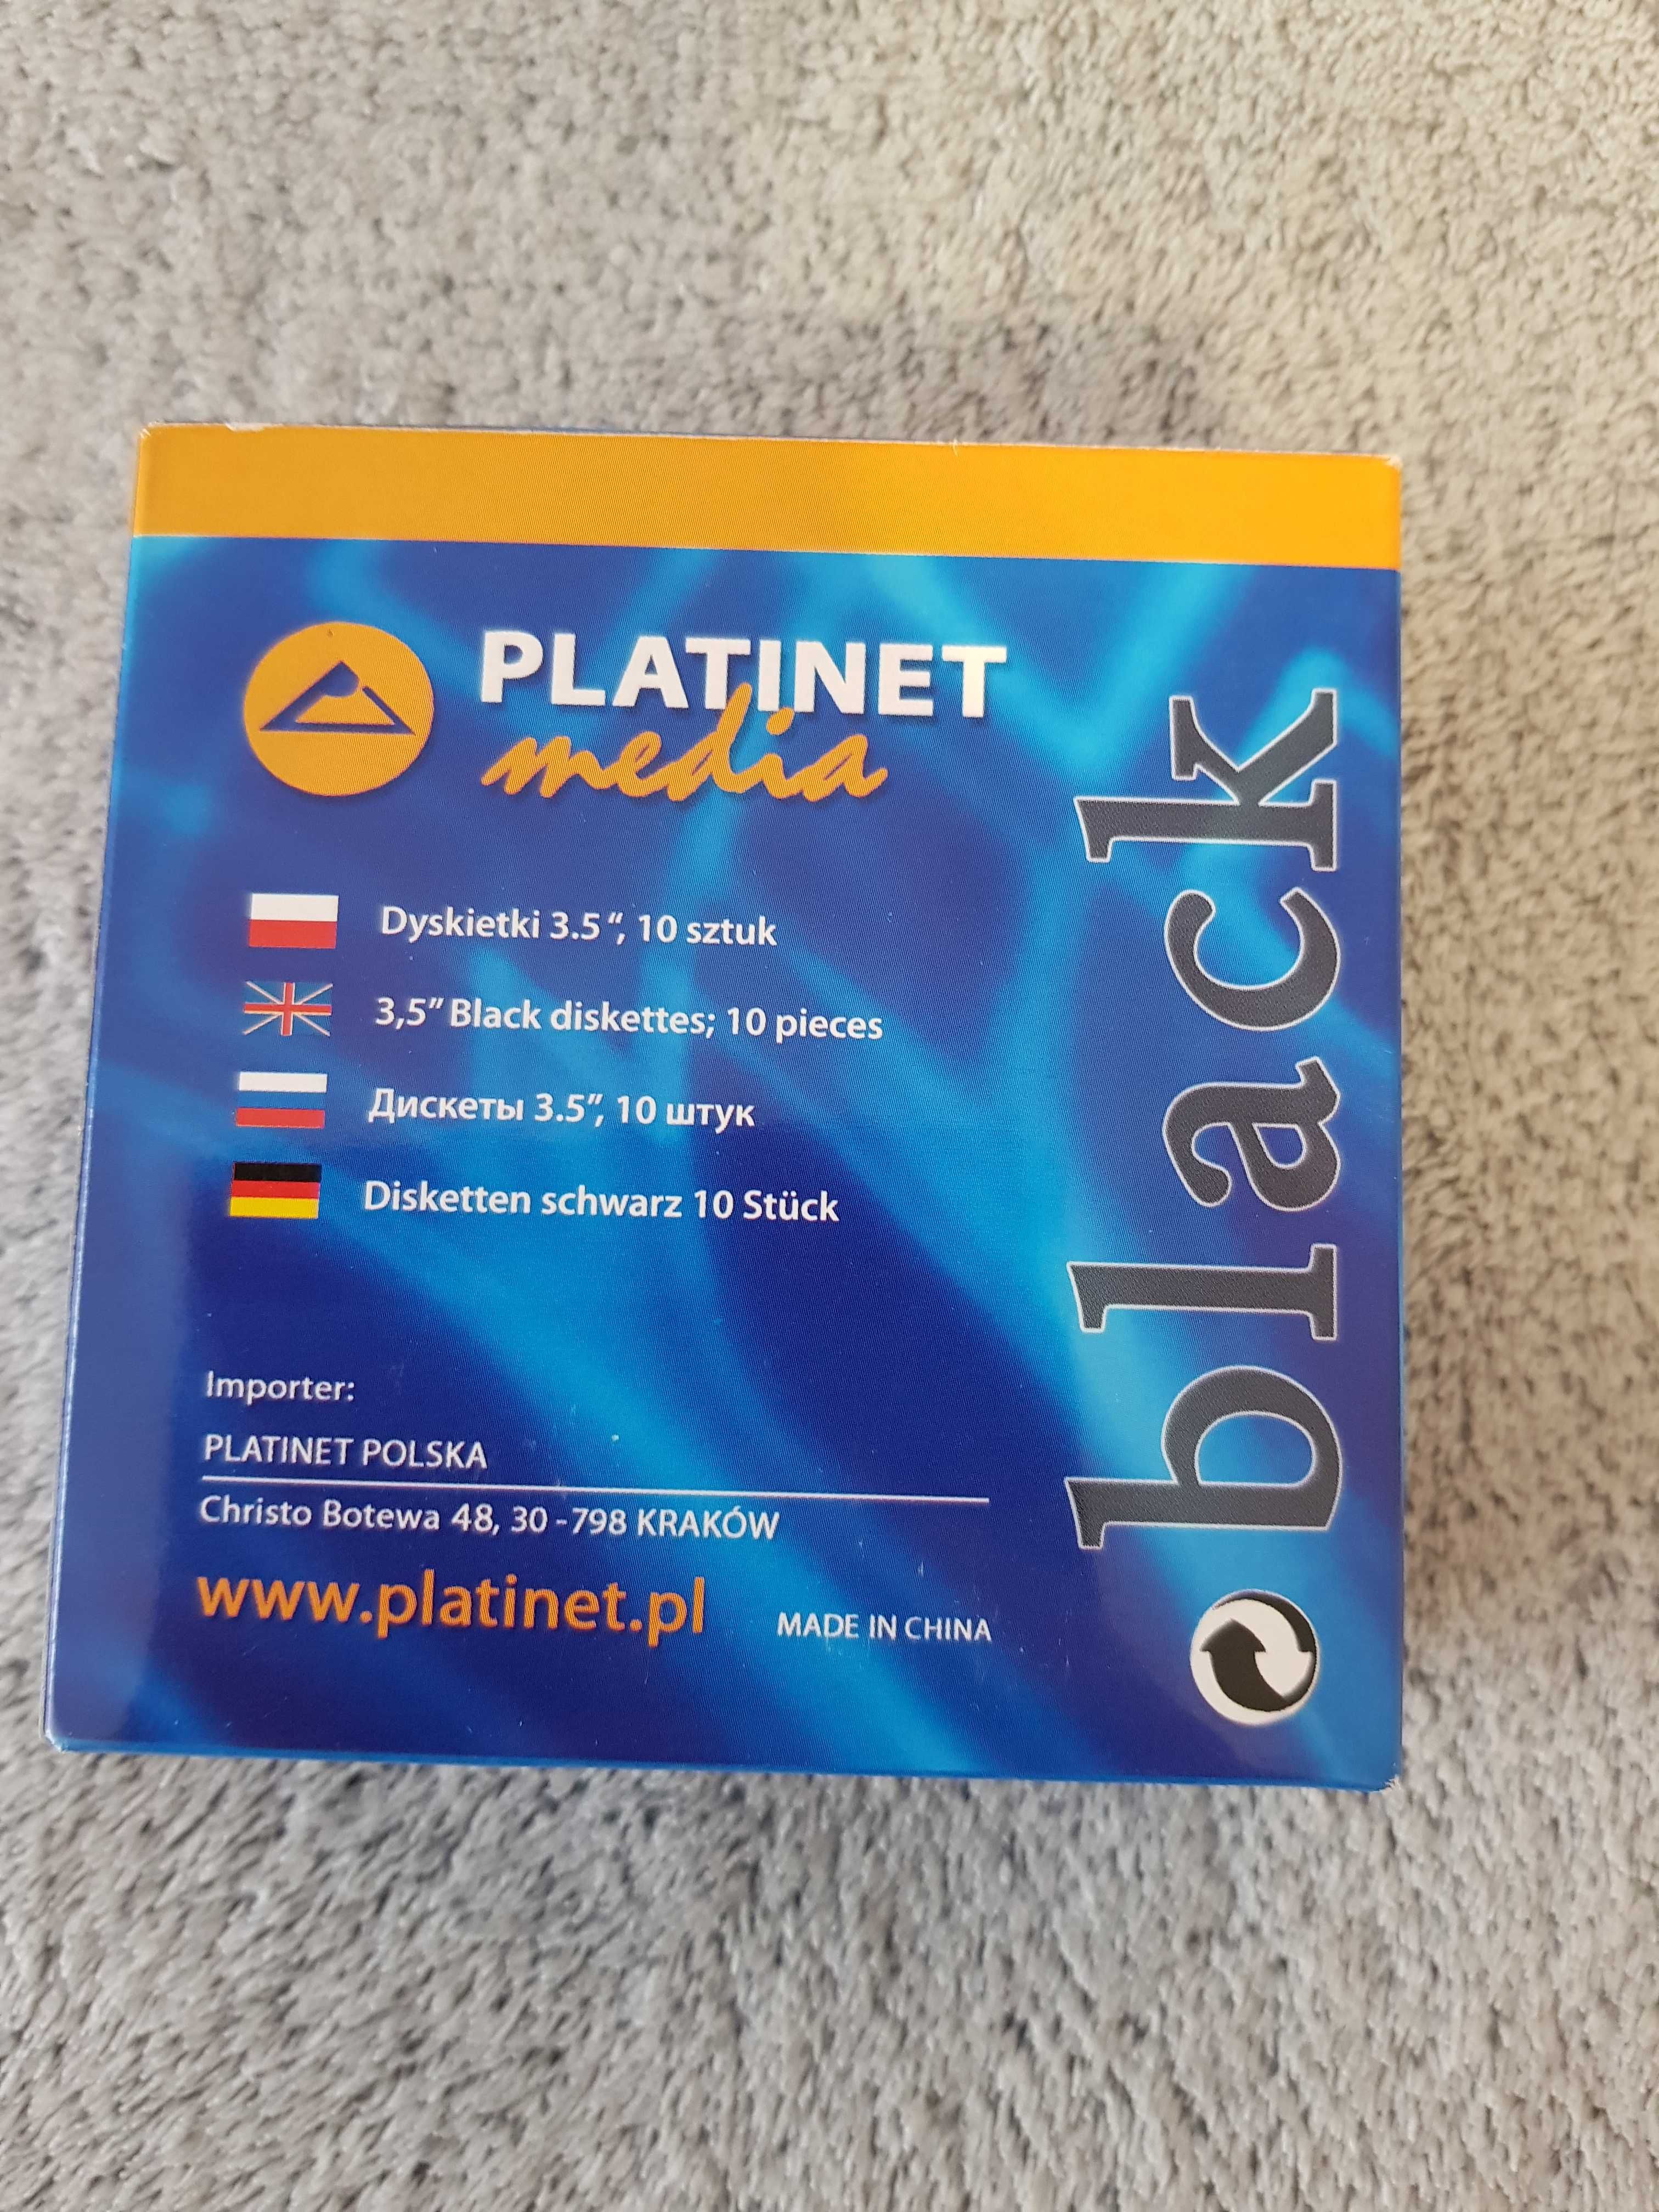 Dyskietki/ 2HD diskettes 3.5" black 10 pack Platinet media NOWE